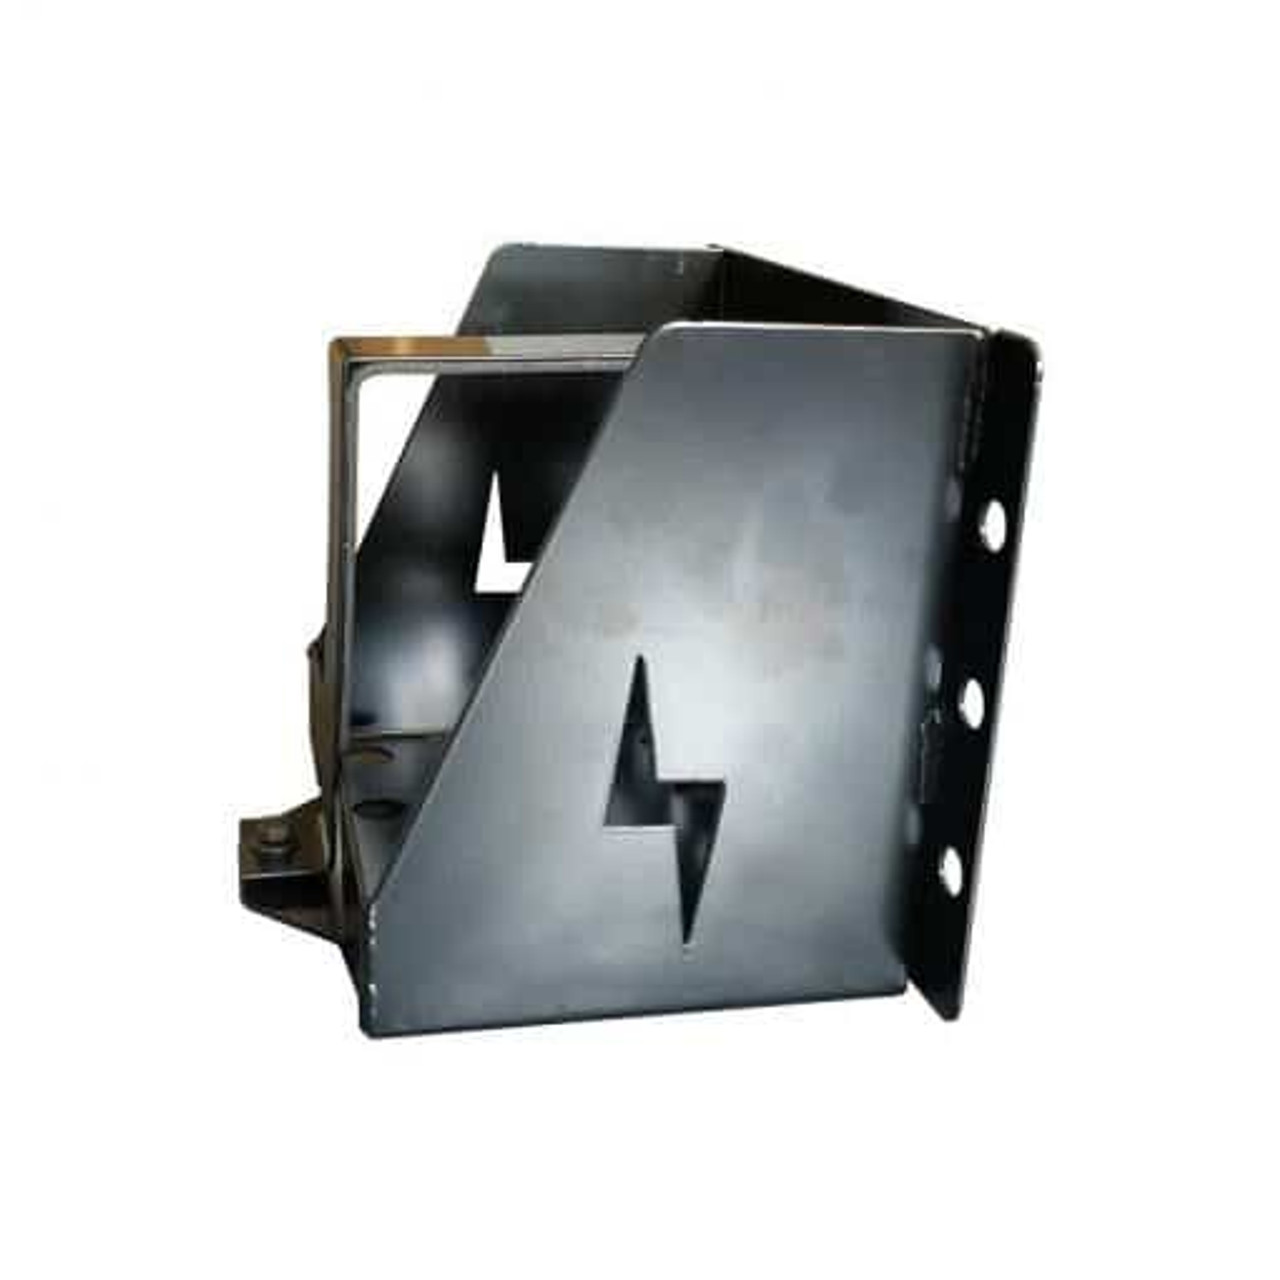 Go Lithium 16v Ultralight Dual Battery Box/Mount